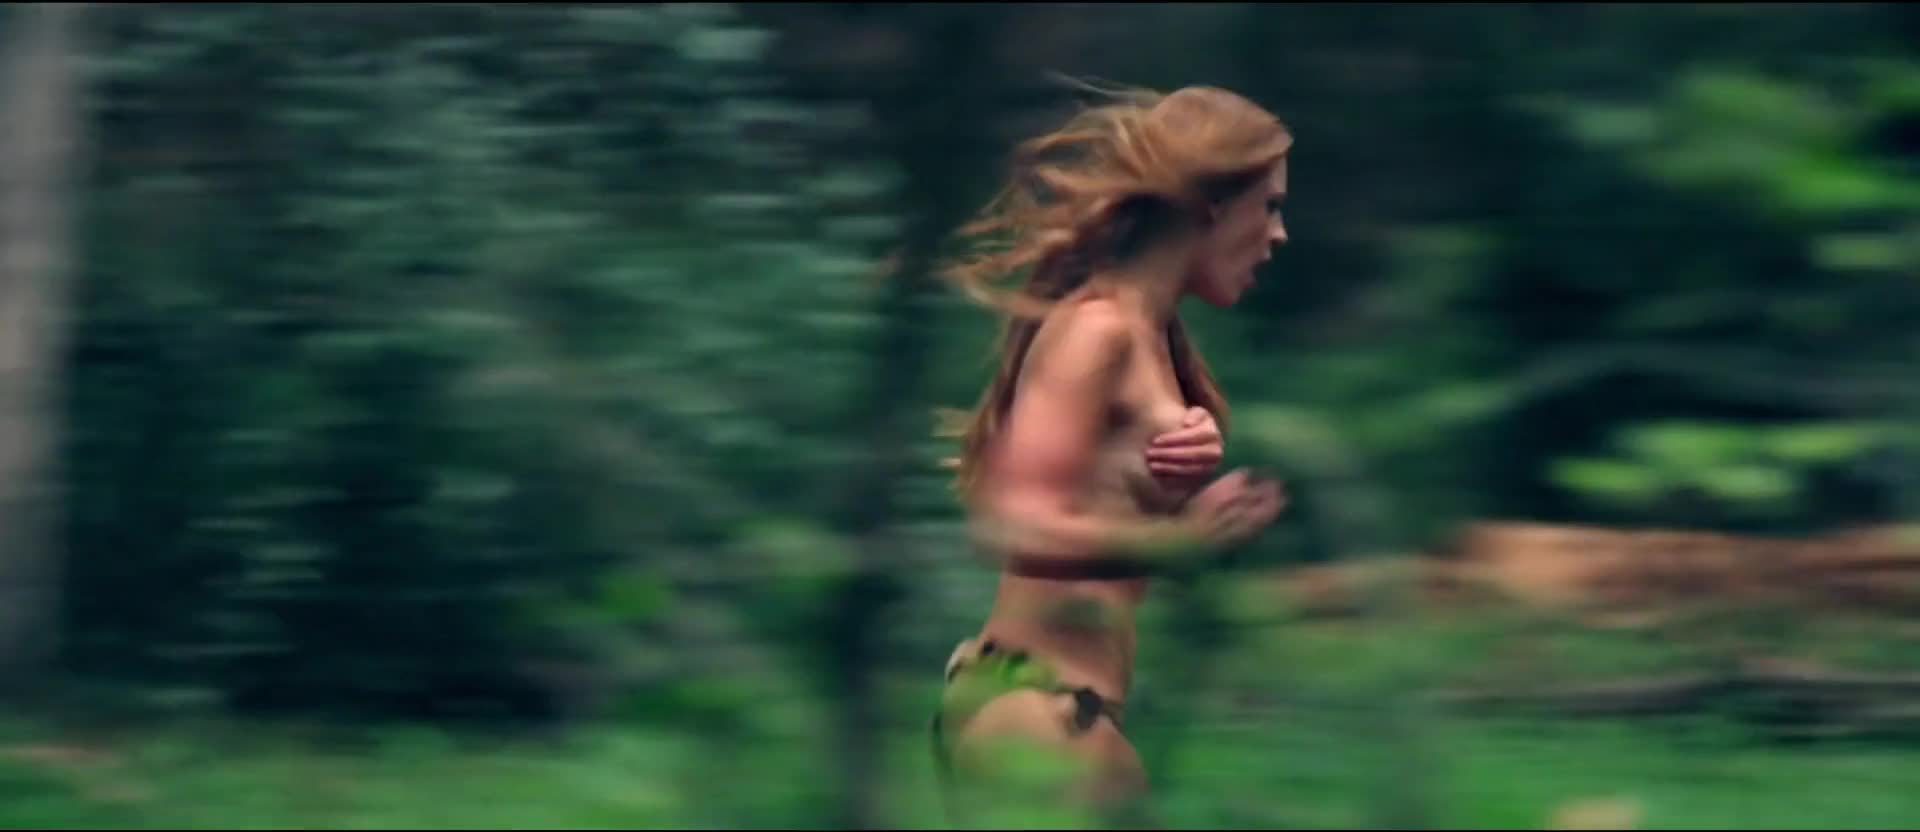 Inara The Jungle Girl Nude Pics Page